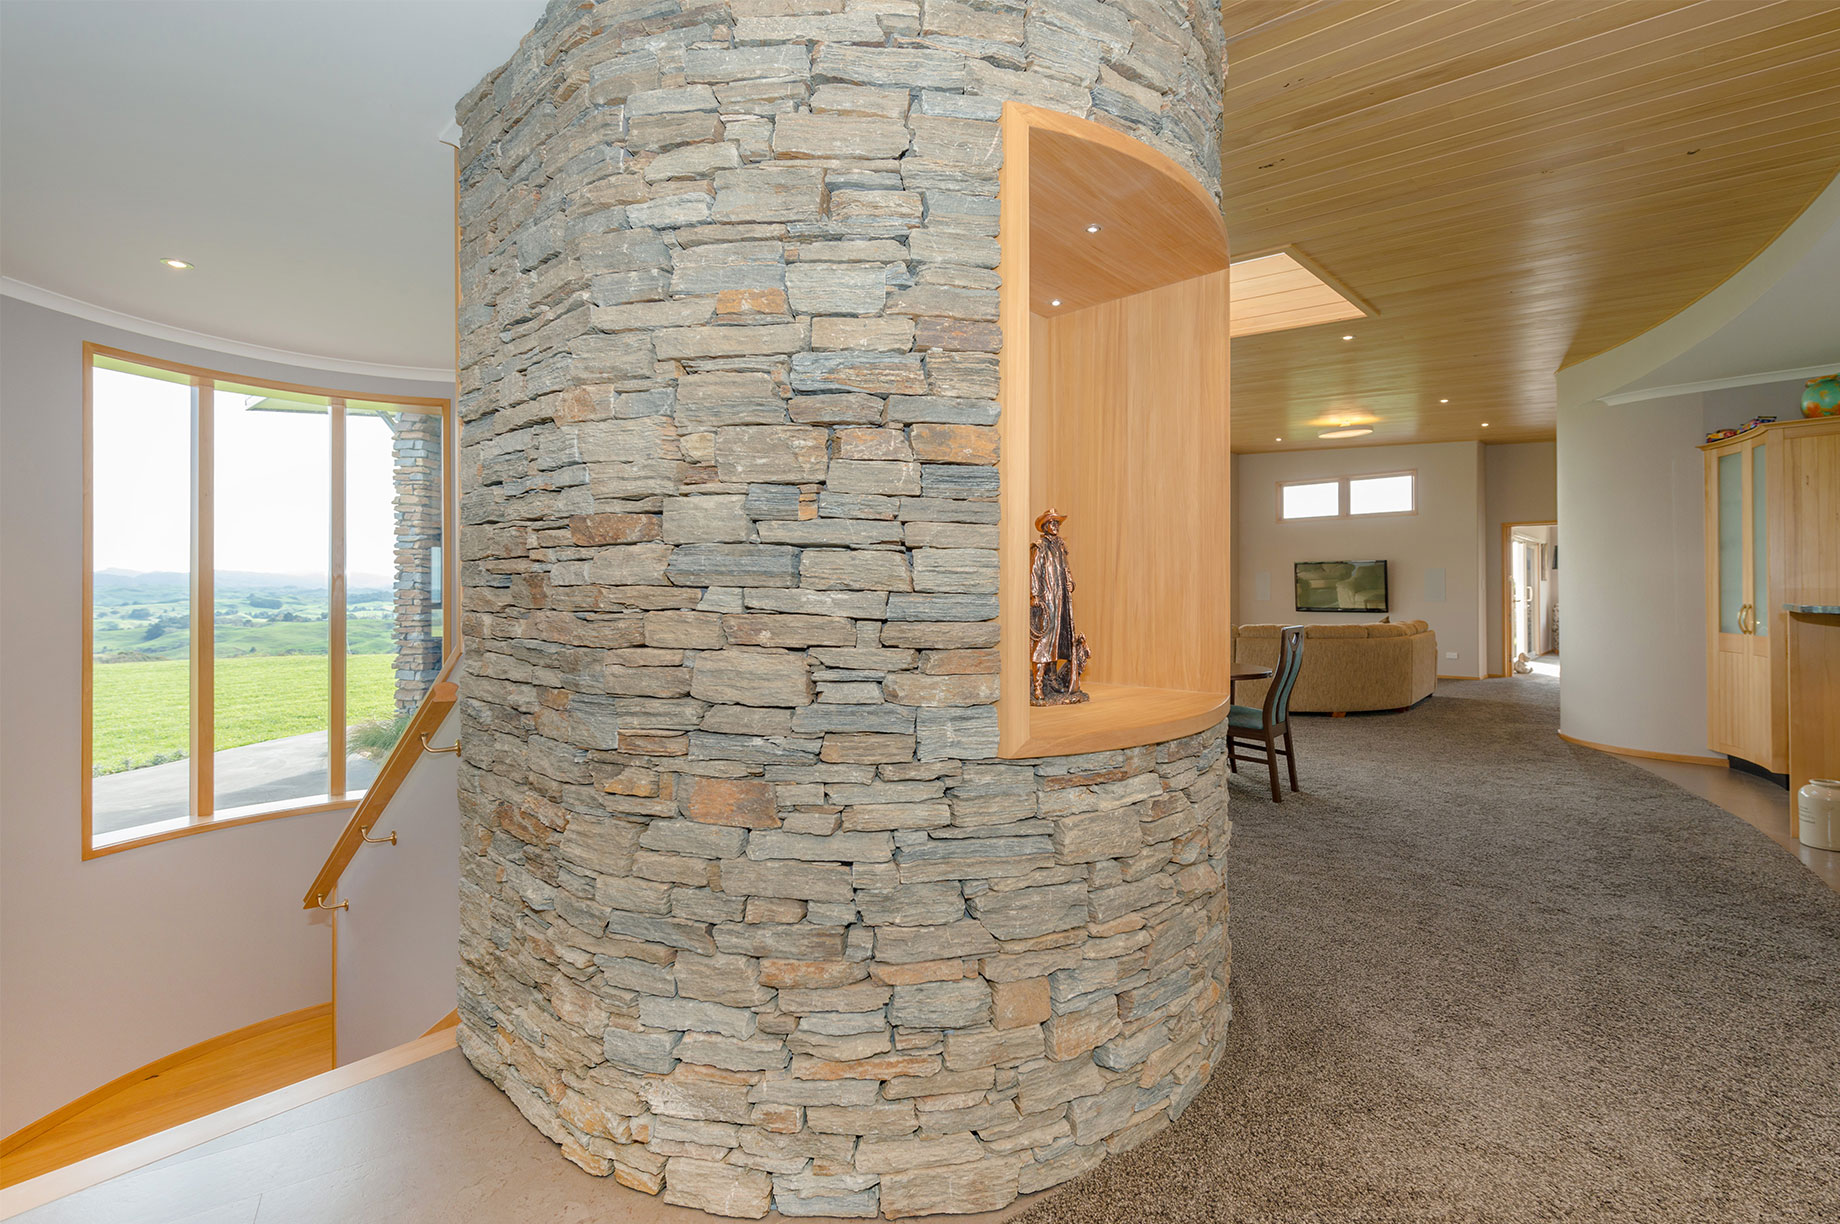 Circular feature stone wall interior